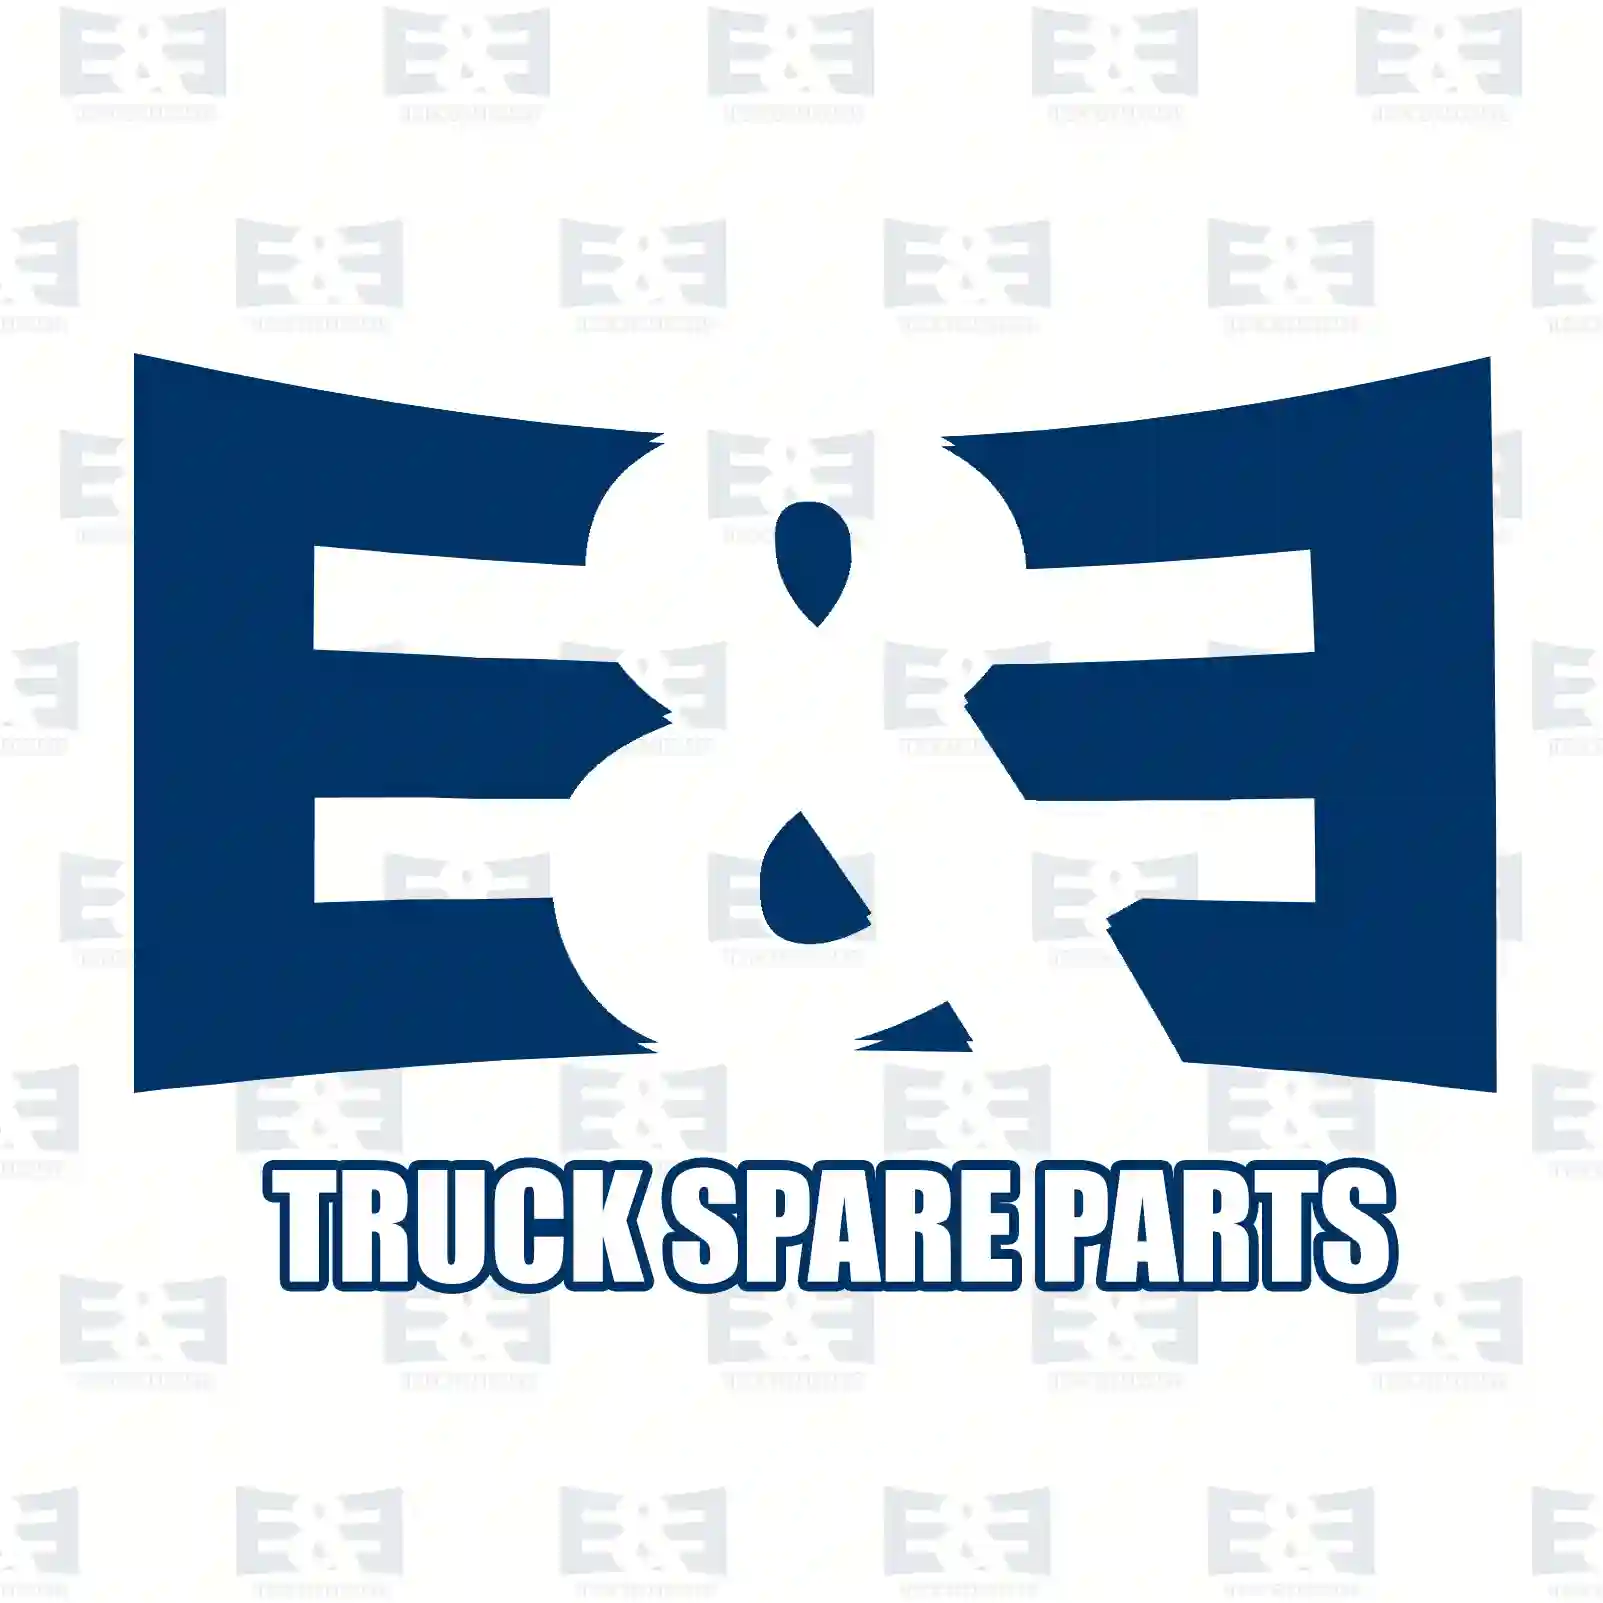 Repair kit, plug, 2E2284089, #YOK ||  2E2284089 E&E Truck Spare Parts | Truck Spare Parts, Auotomotive Spare Parts Repair kit, plug, 2E2284089, #YOK ||  2E2284089 E&E Truck Spare Parts | Truck Spare Parts, Auotomotive Spare Parts